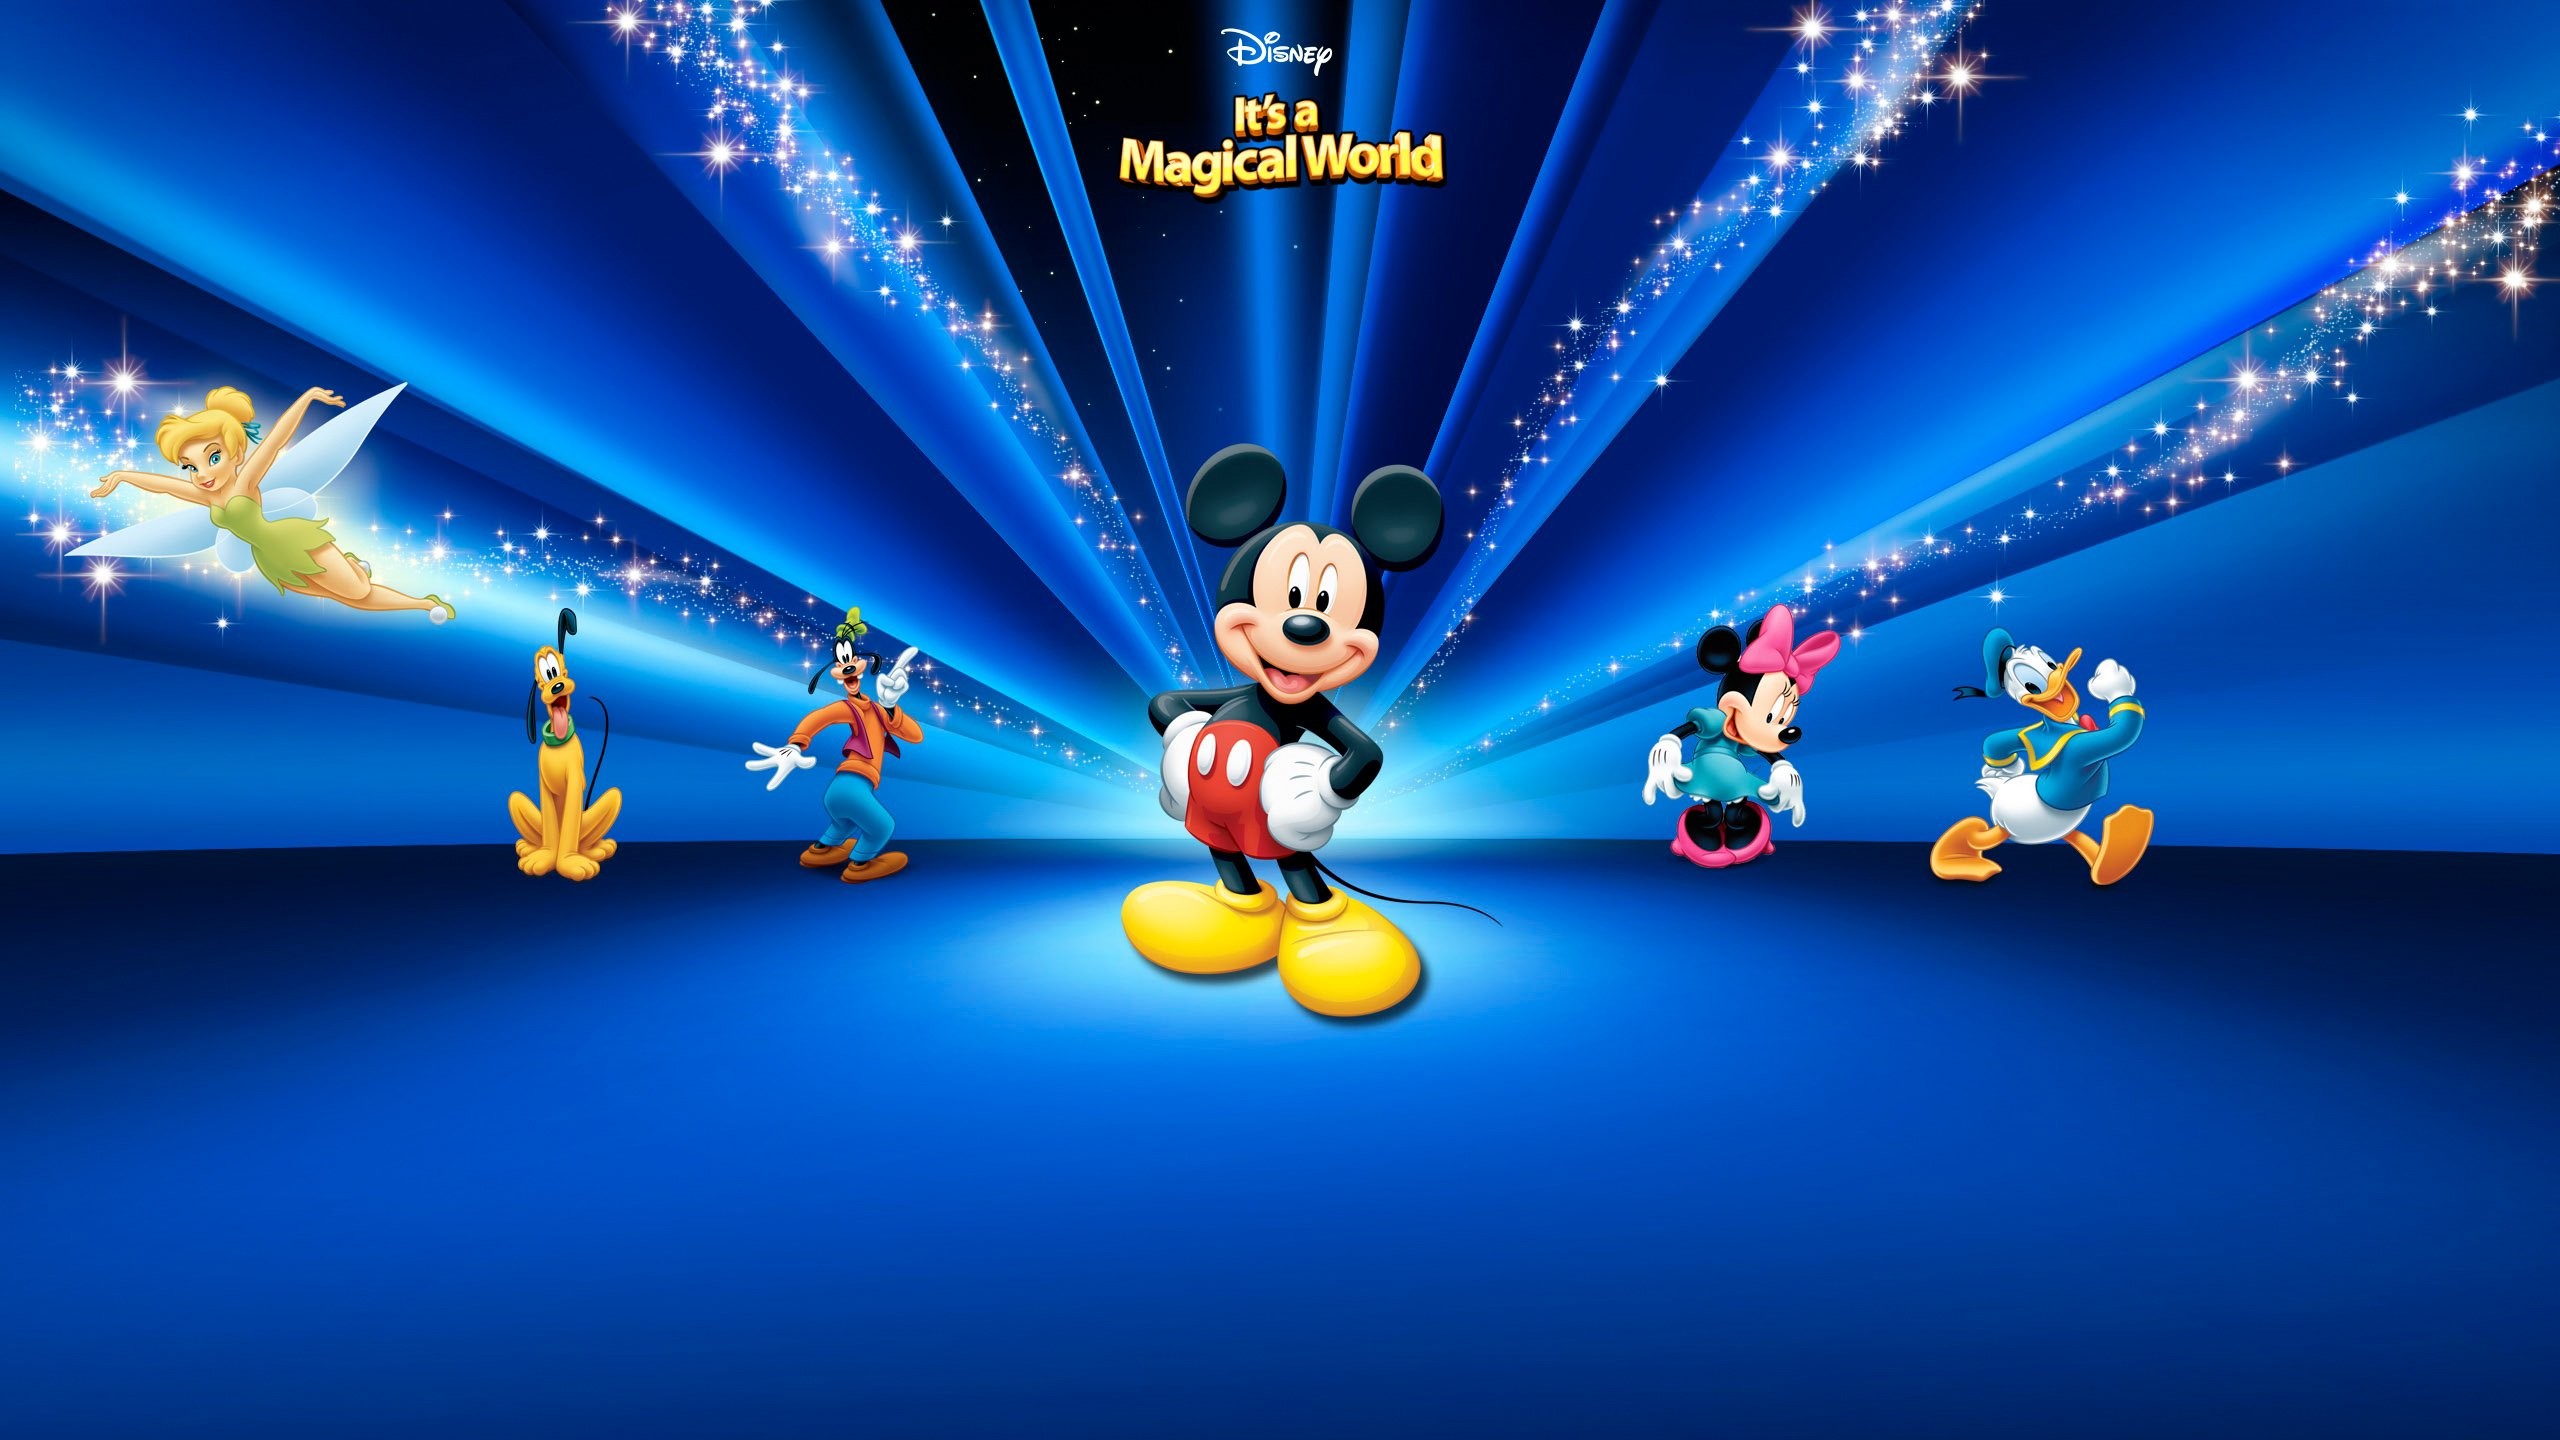 Mouse Mickey Cartoon Disney Danald Minnie Goofy Backgrounds Daisy World Blue Sparkling High Definition Amazing Desktop Wallpapers For Windows Apple Mac 2560x1440